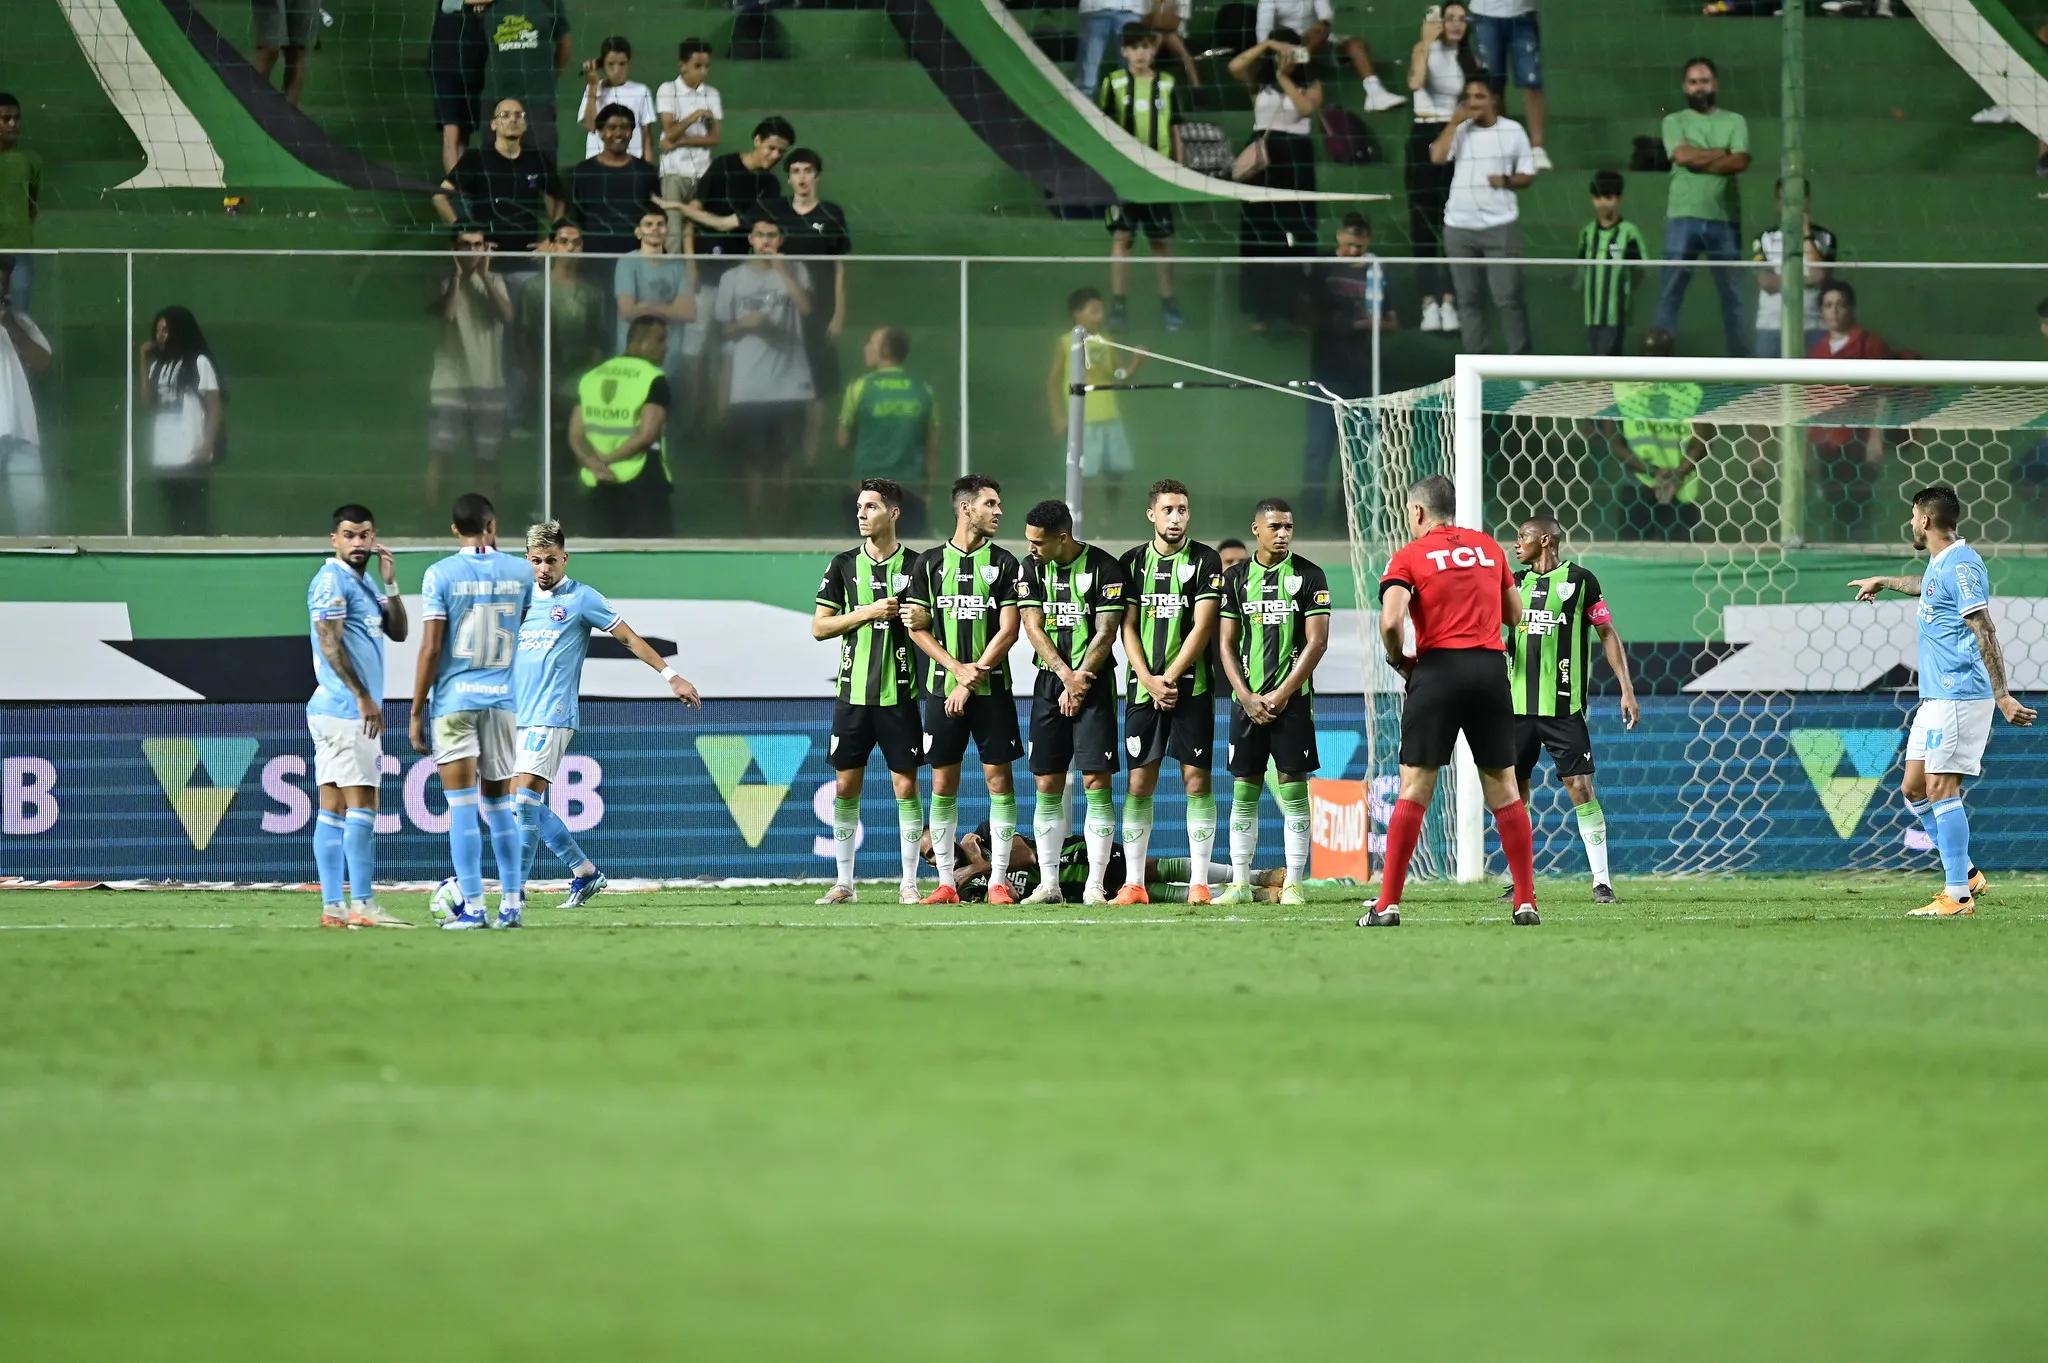 Equipe de Rogério Ceni desperdiçou inúmeras chances de marcar